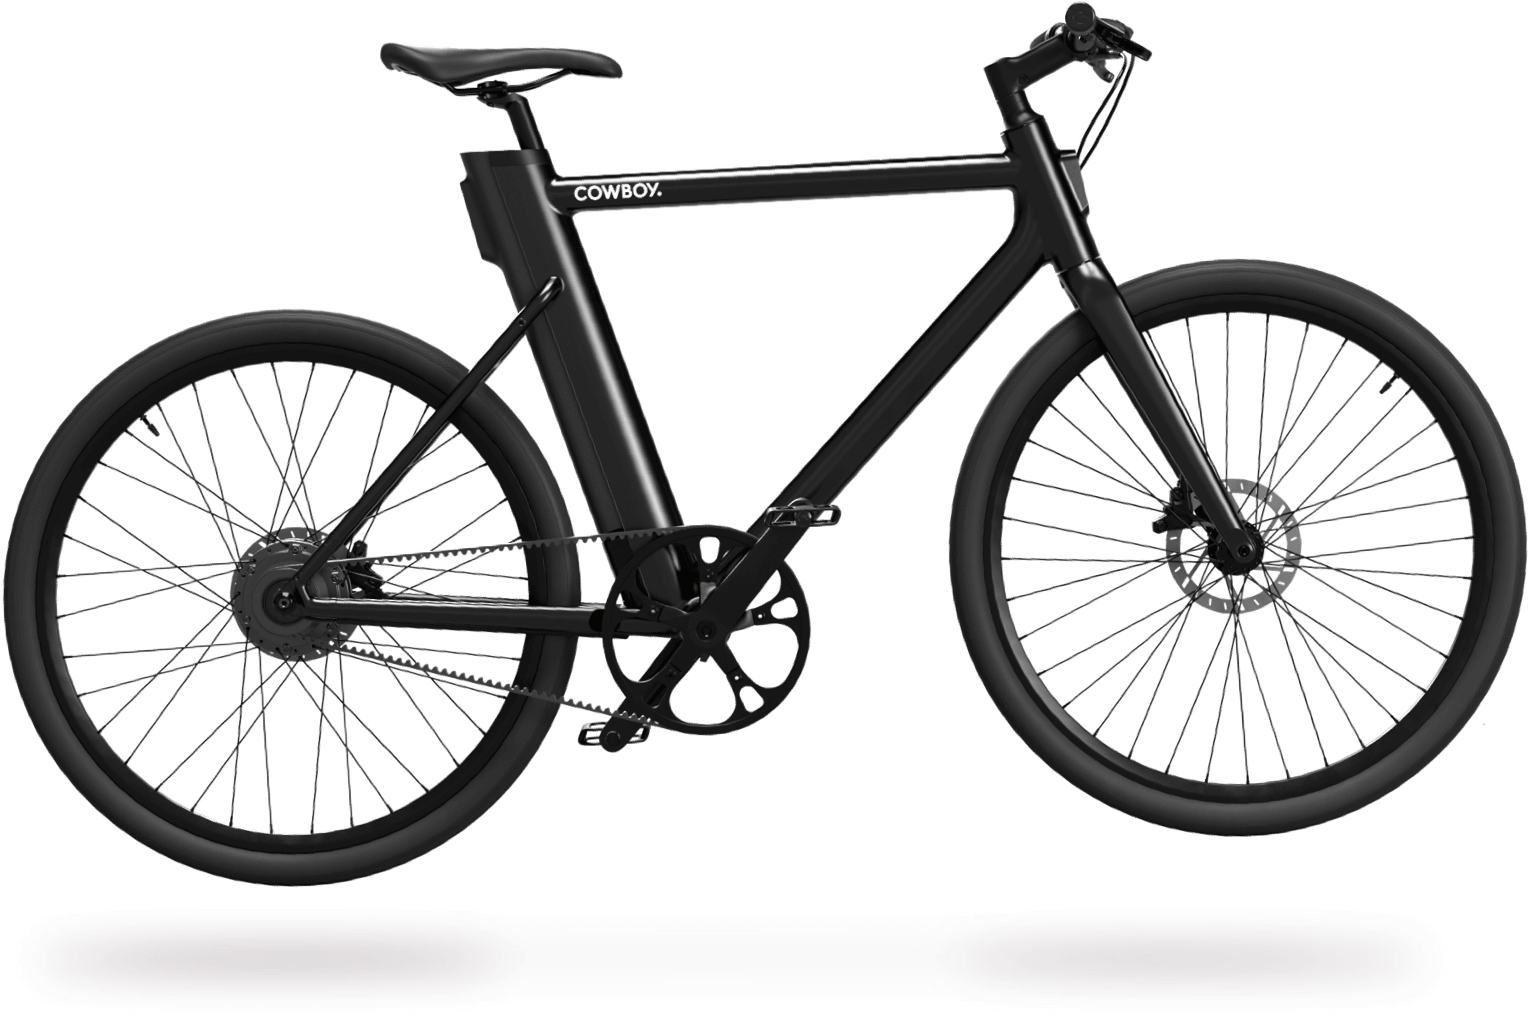 garmin edge 520 plus gps cycling computer 2018